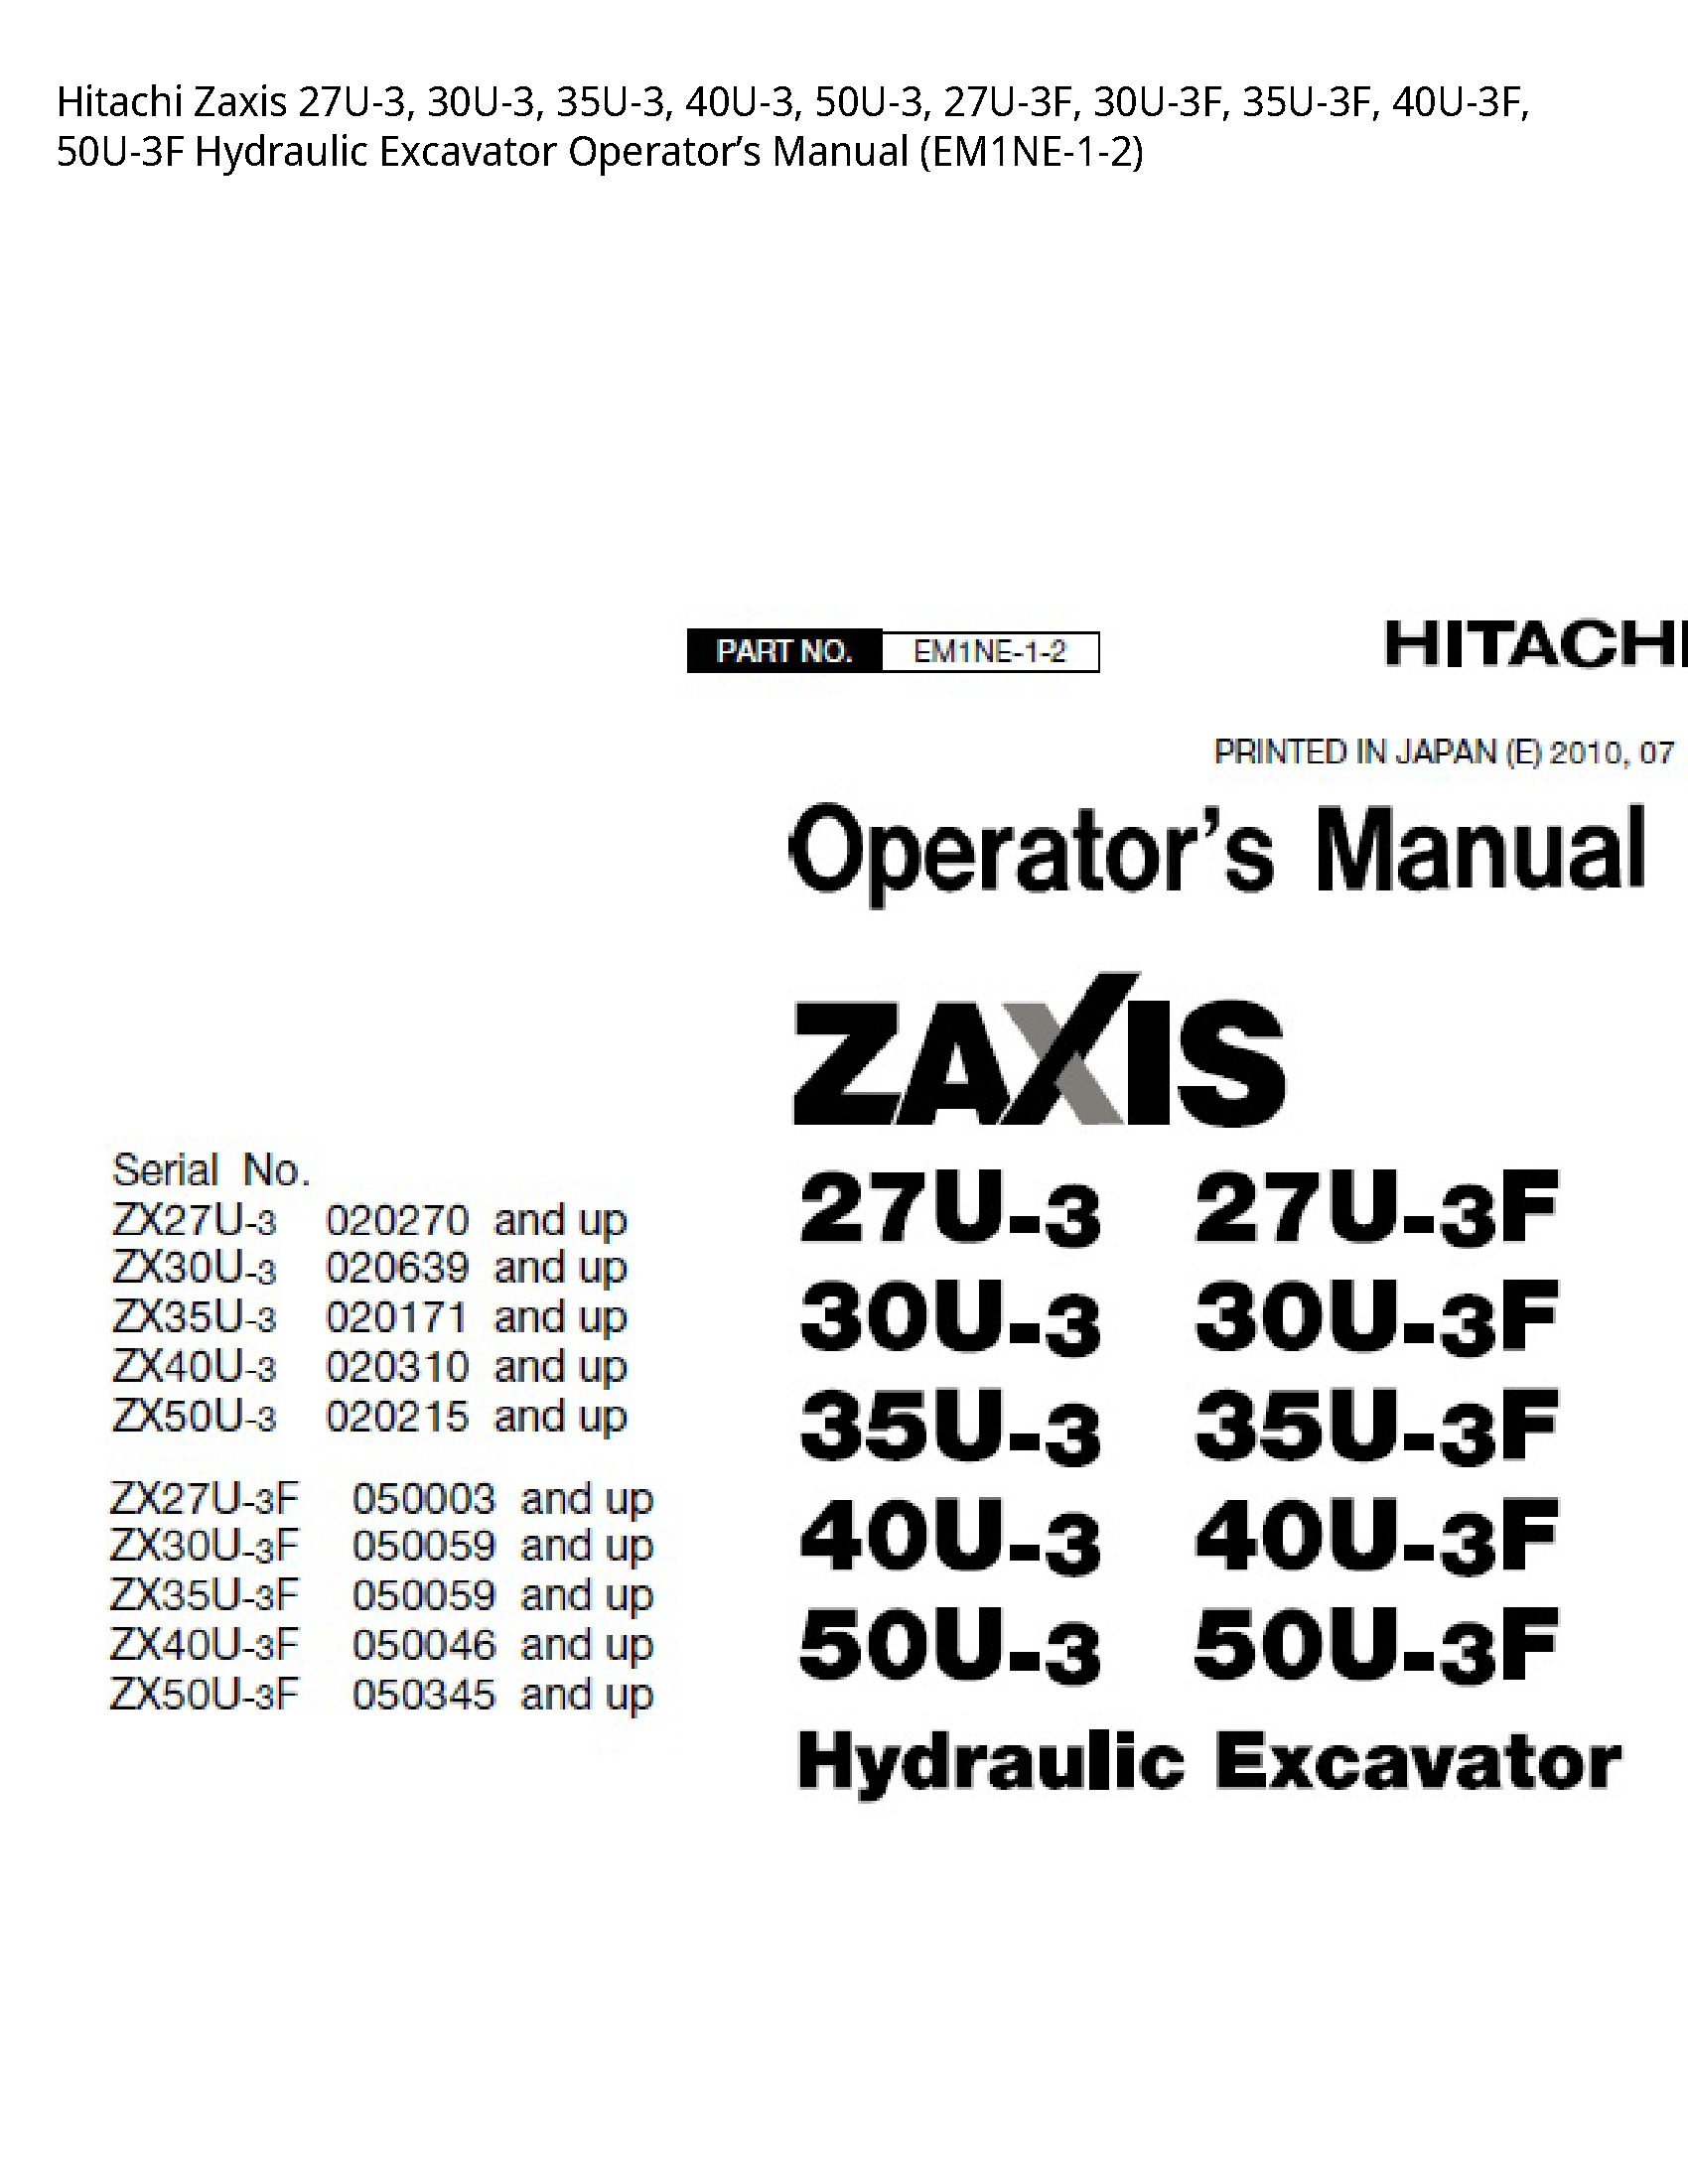 Hitachi 27U-3 Zaxis Hydraulic Excavator Operator’s manual